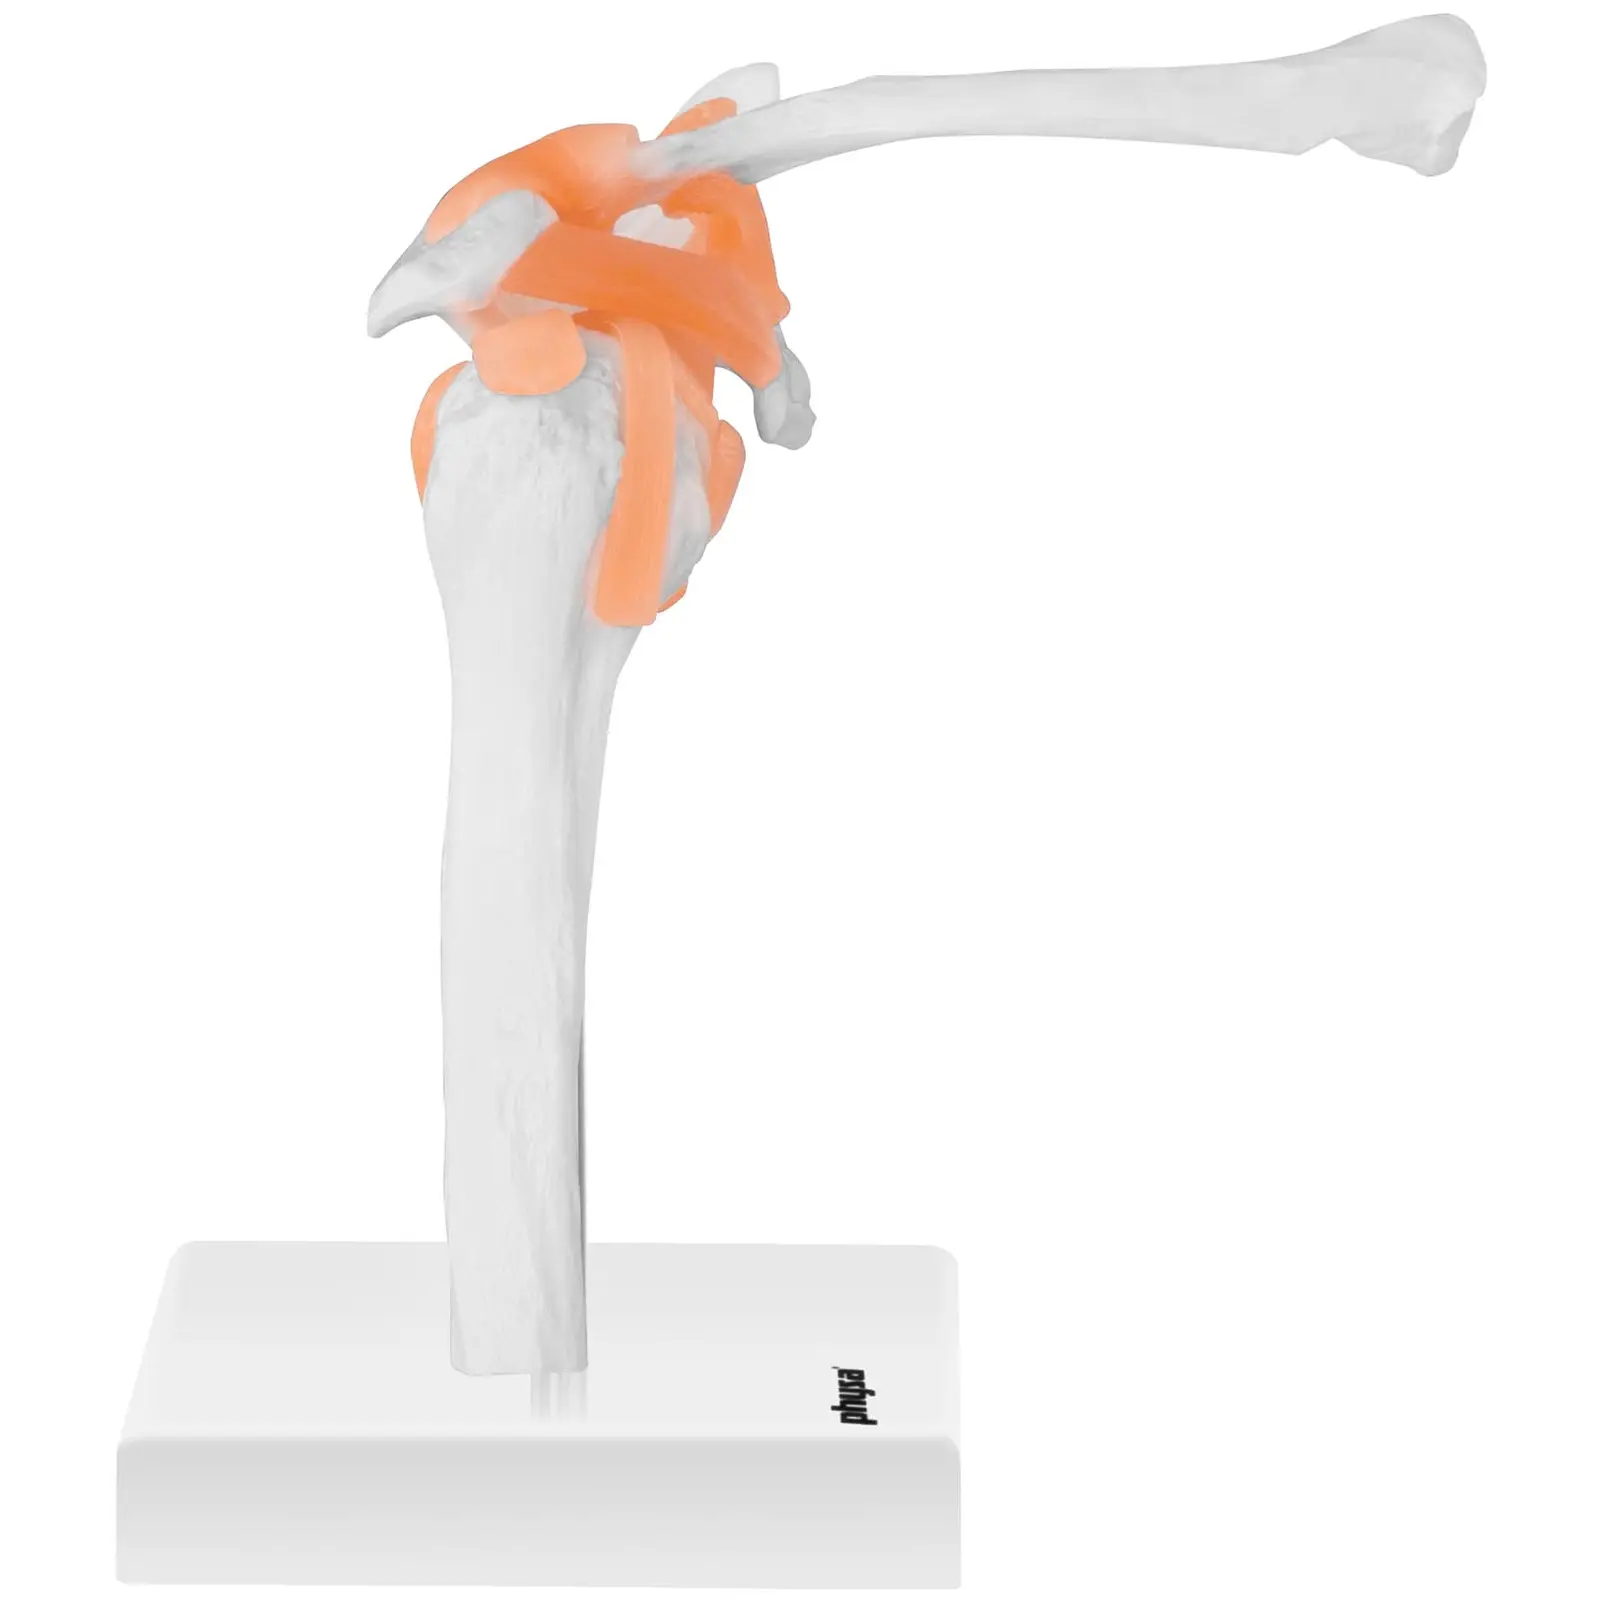 Skulderledd – Anatomisk modell